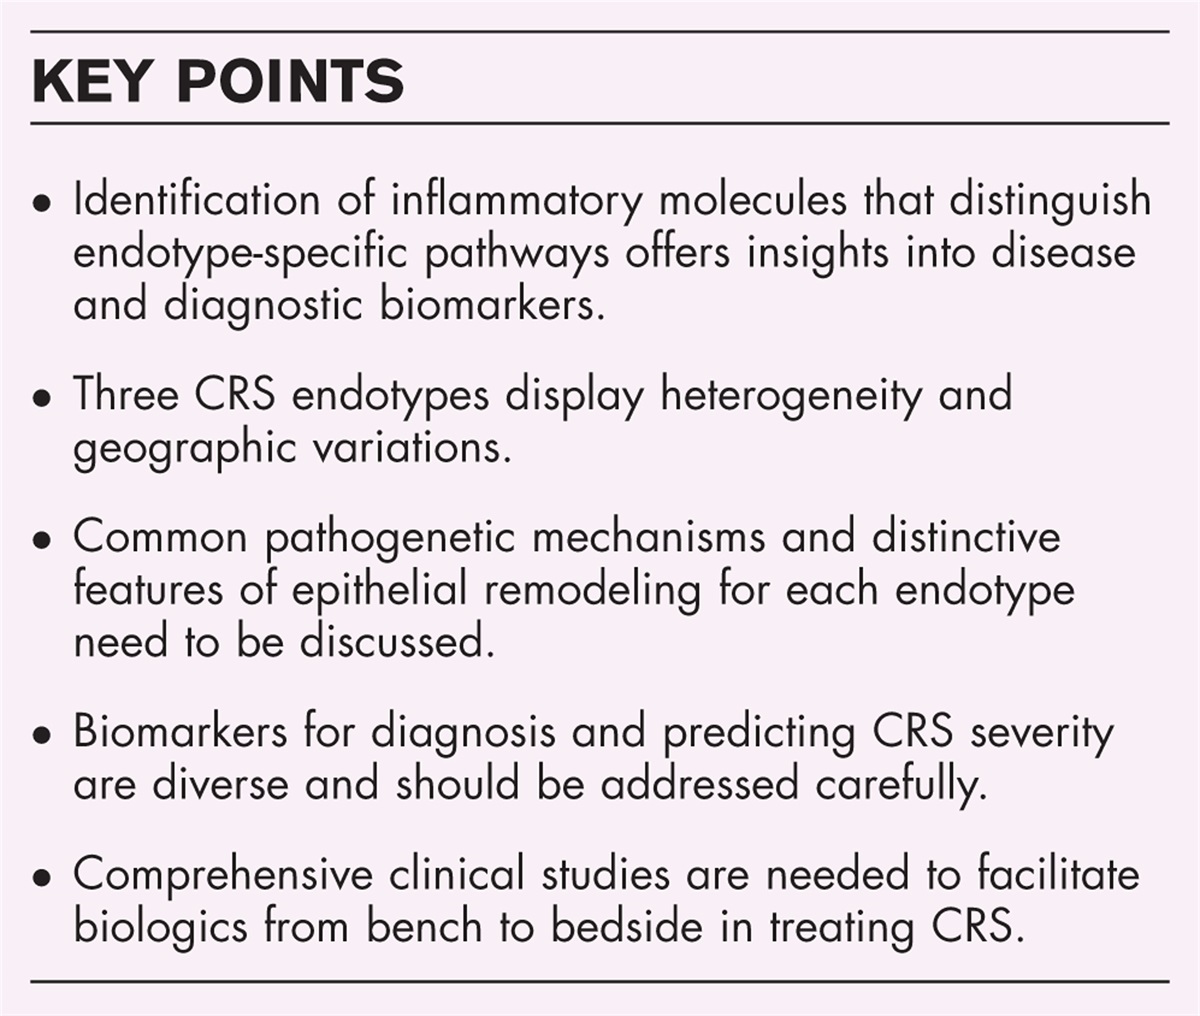 Endotypic heterogeneity and pathogenesis in chronic rhinosinusitis